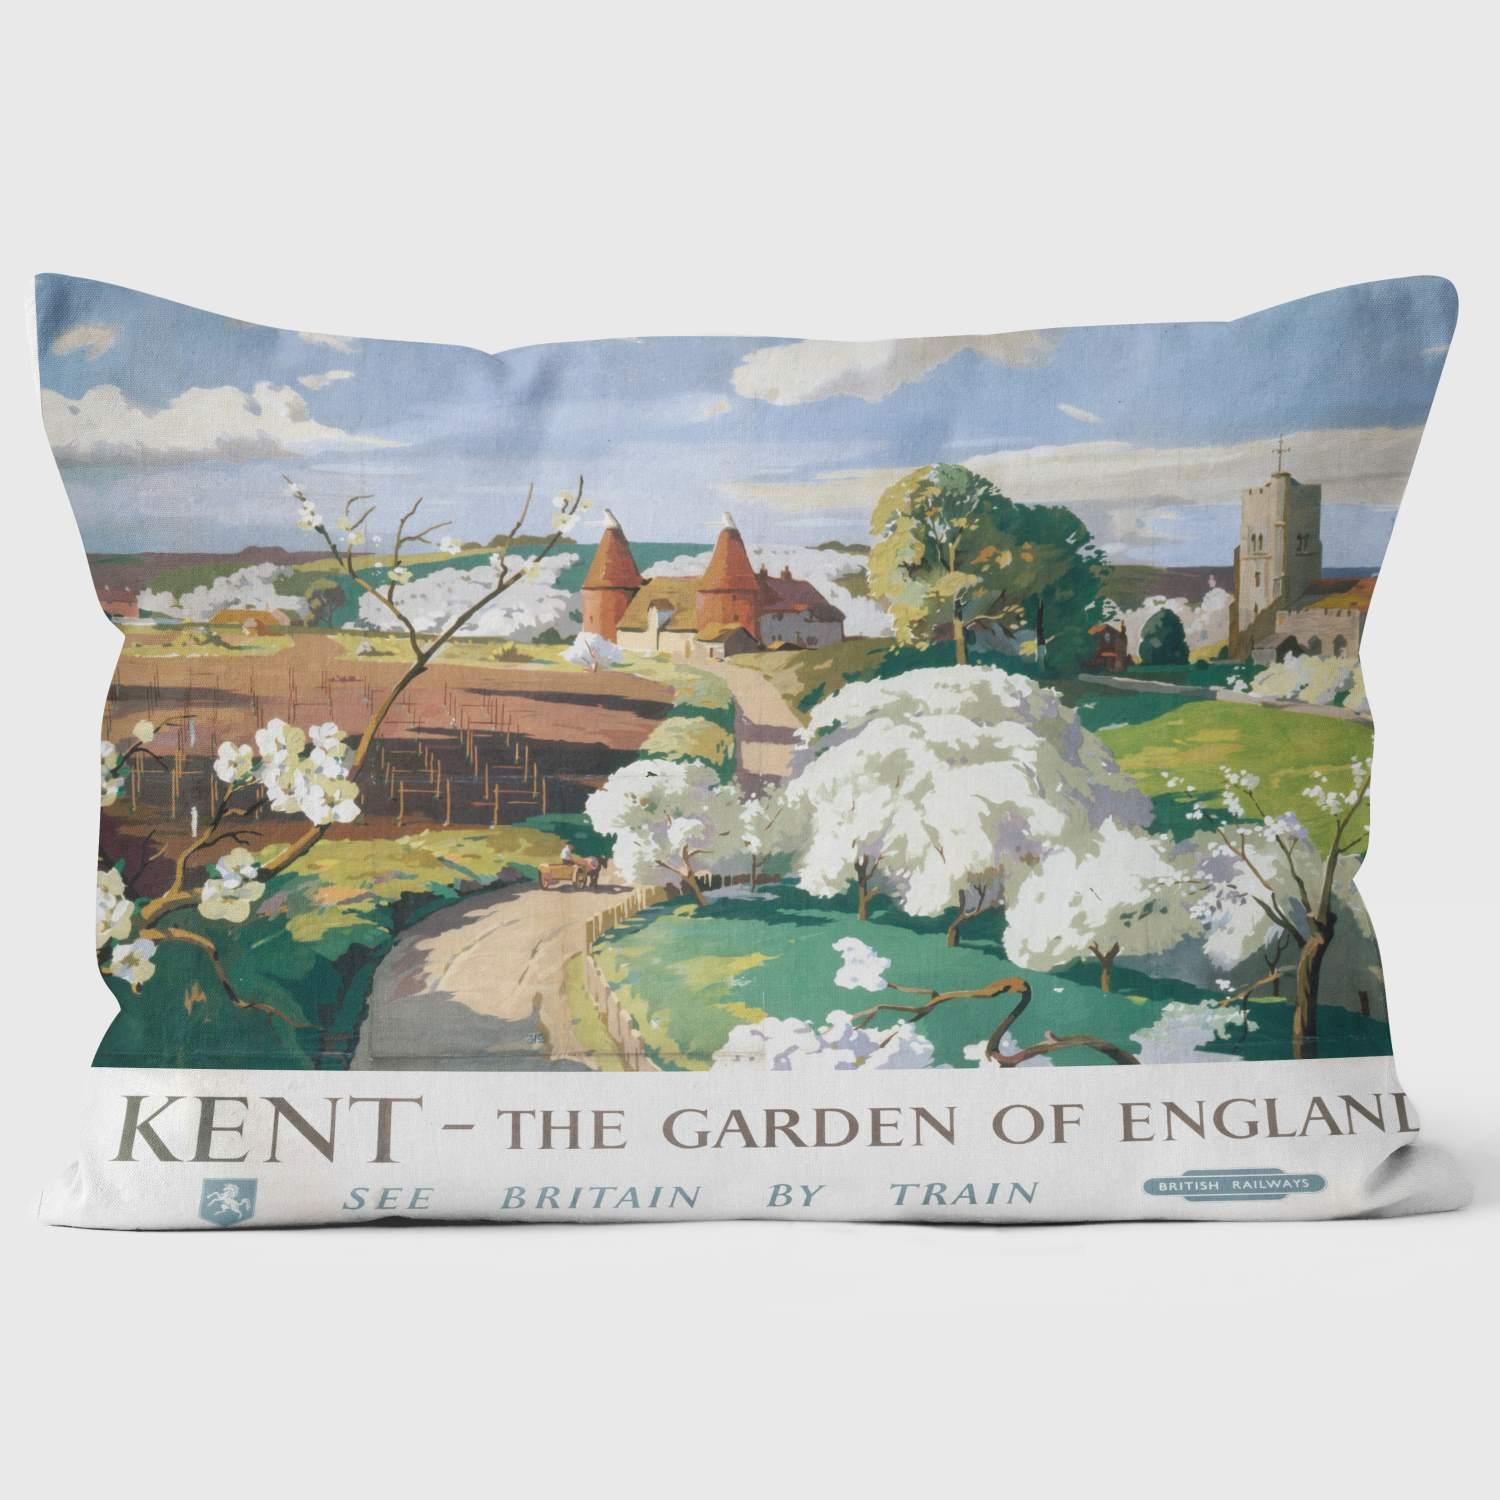 Kent - The Garden of England BR 1955 - National Railway Museum Cushion - Handmade Cushions UK - WeLoveCushions